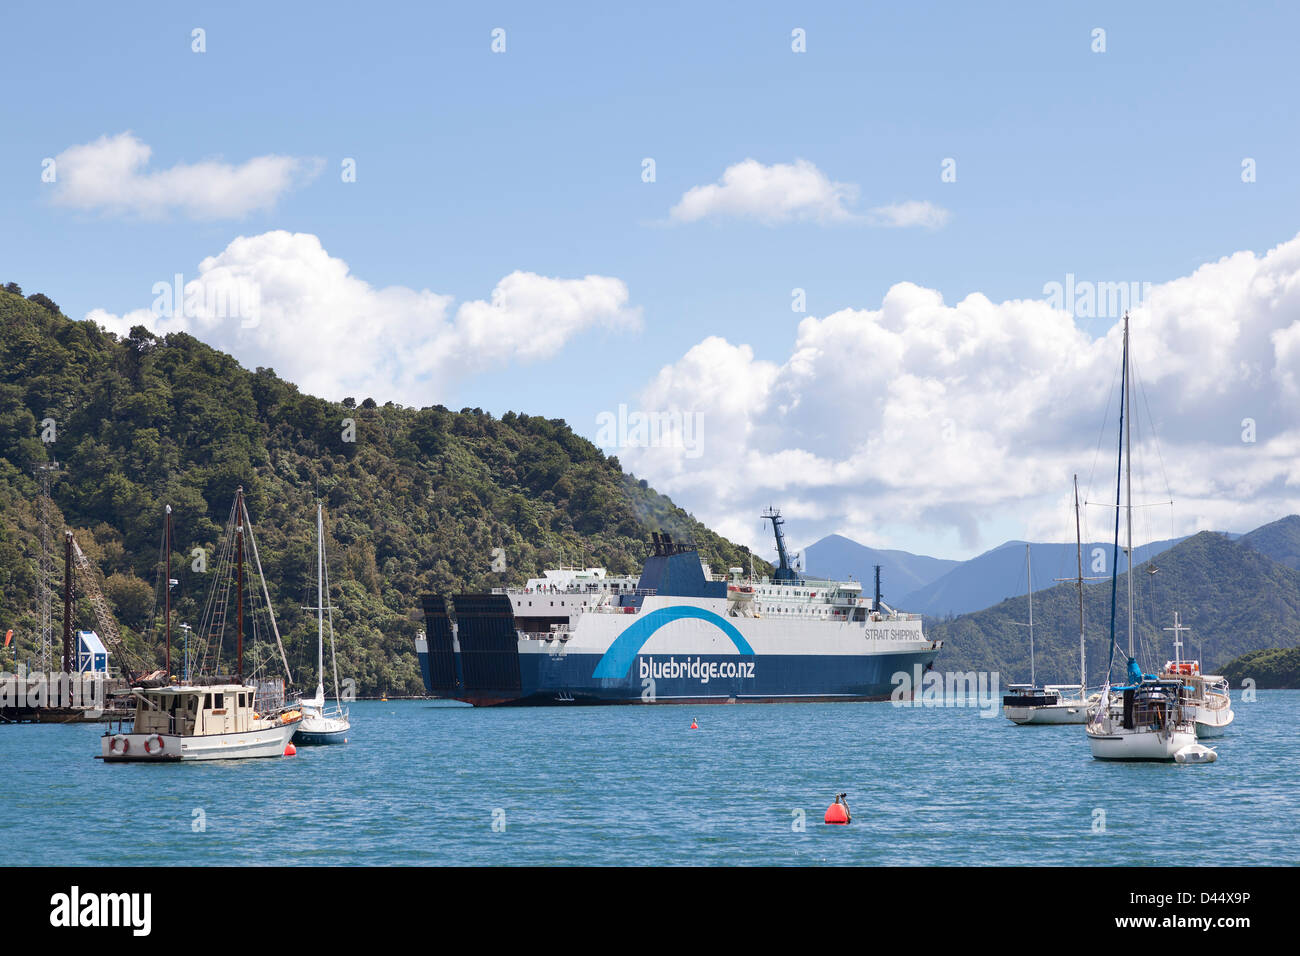 Harbour of Picton with the Bluebridge ferry Stock Photo